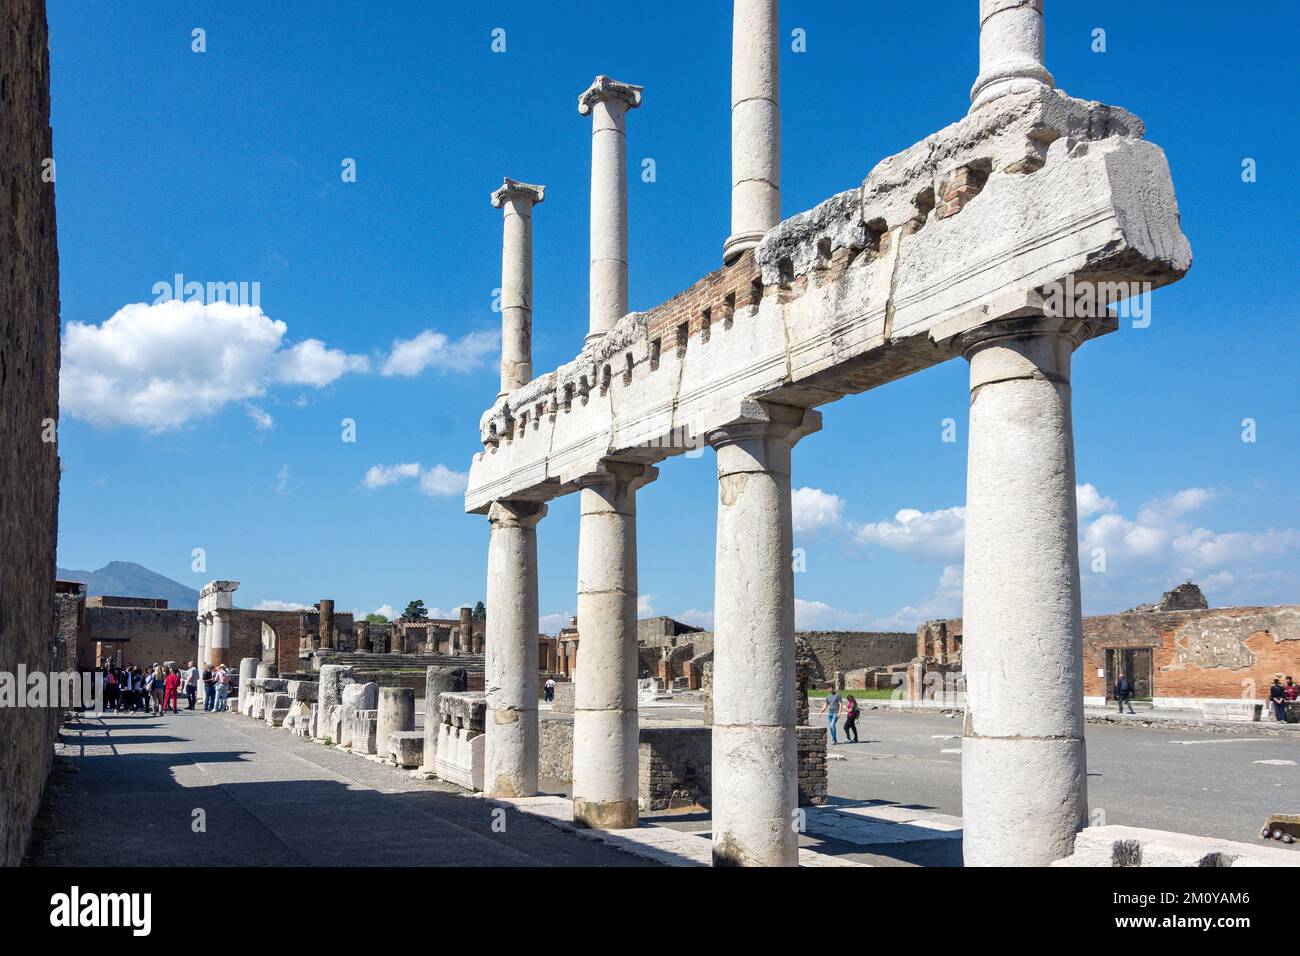 Säulen im Forum, der antiken Stadt Pompeji, Pompeji, der Metropolstadt Neapel, der Region Kampanien, Italien Stockfoto